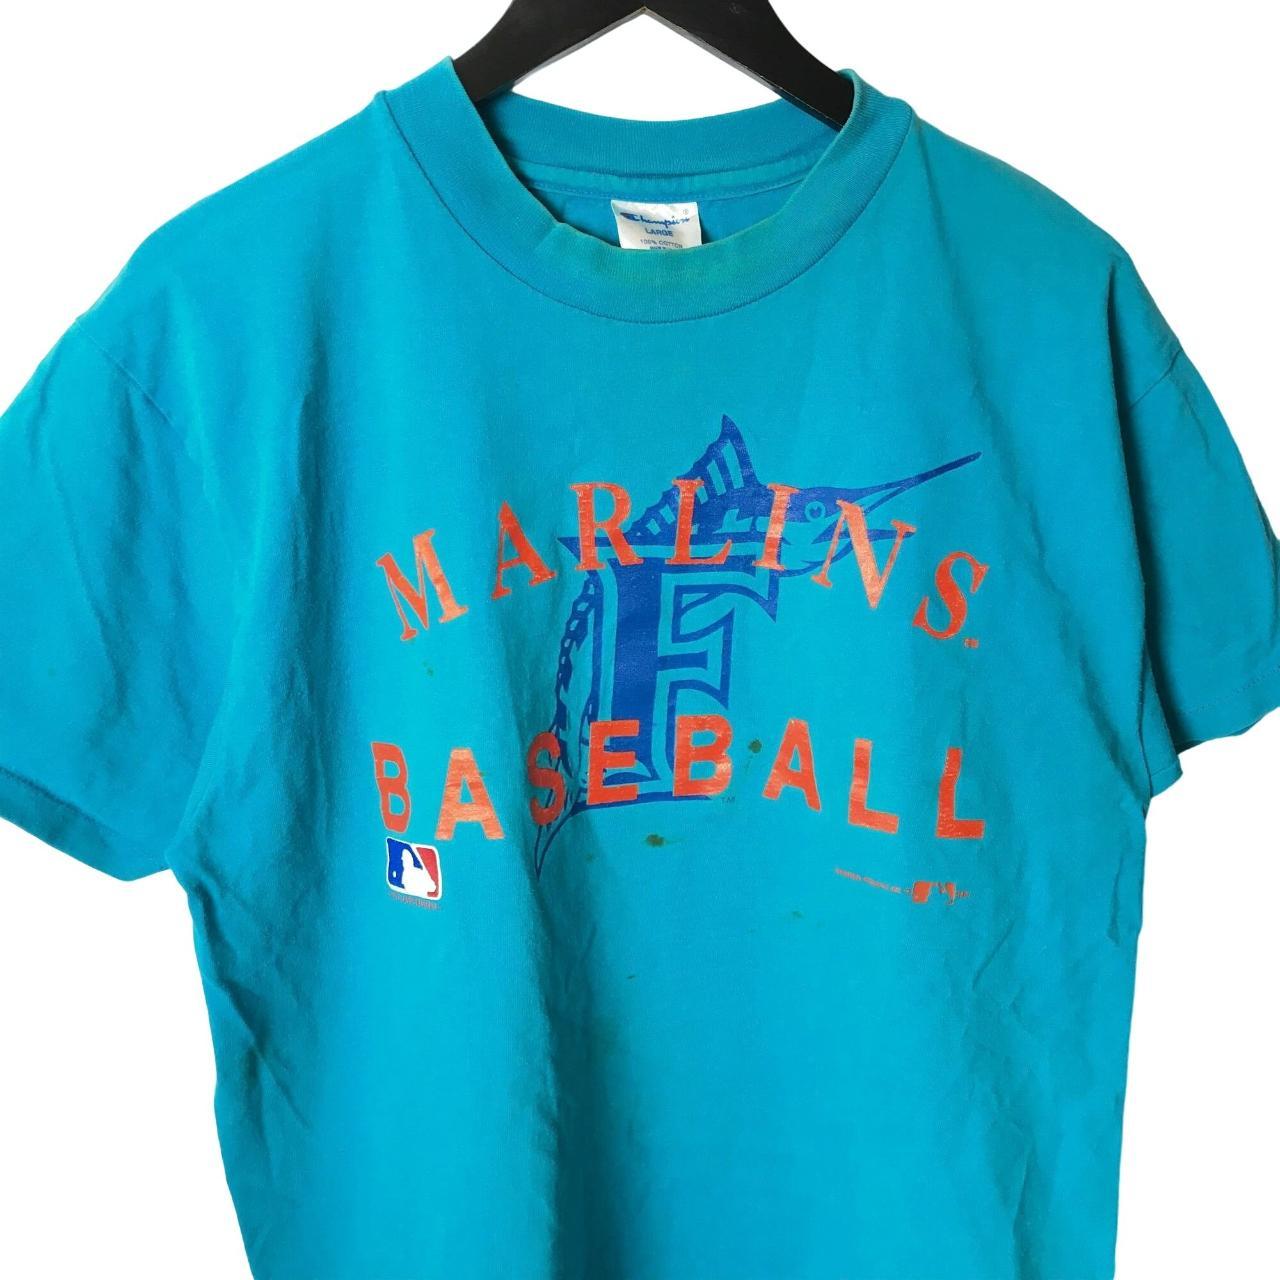 Mlb-baseball T-shirt / Vintage Florida Marlins Tee Shirt / 90s 